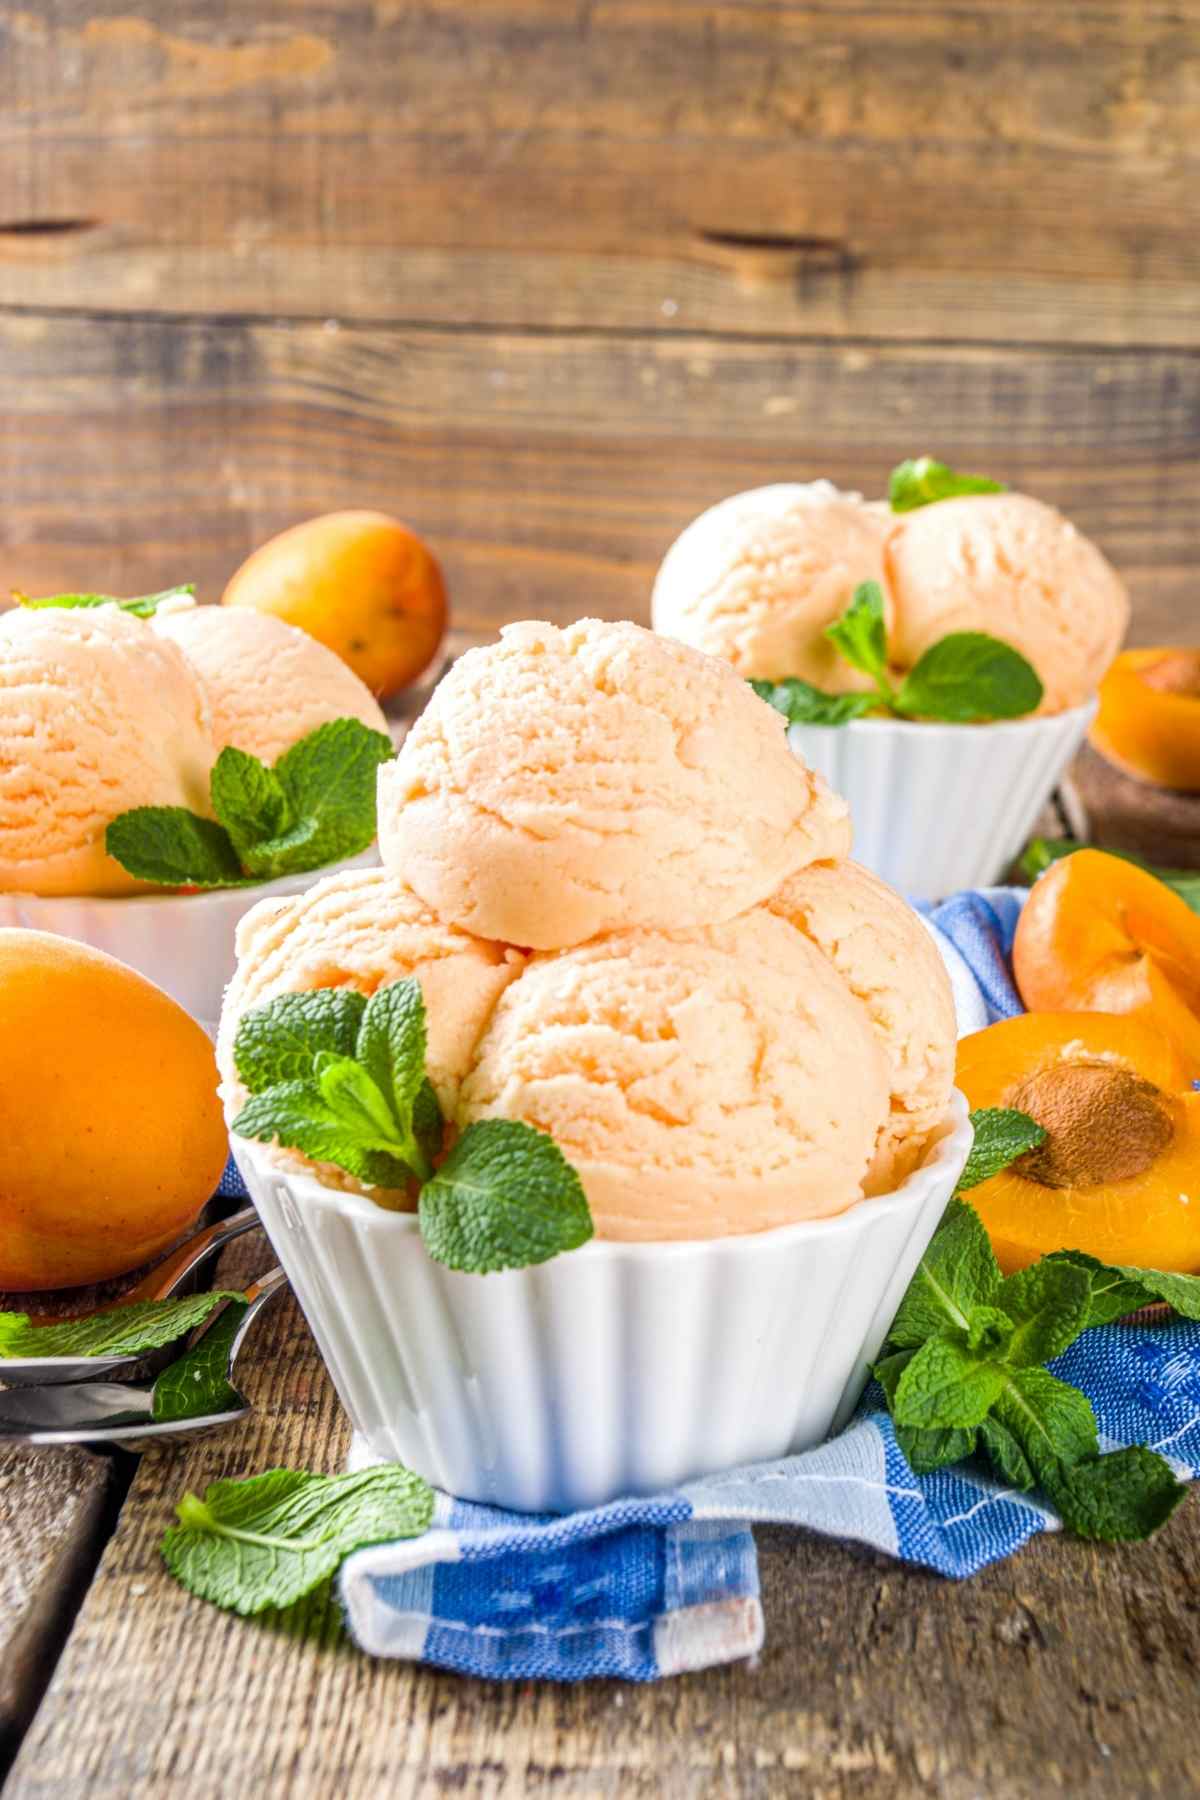 Roasted Apricot and Honey Ice Cream